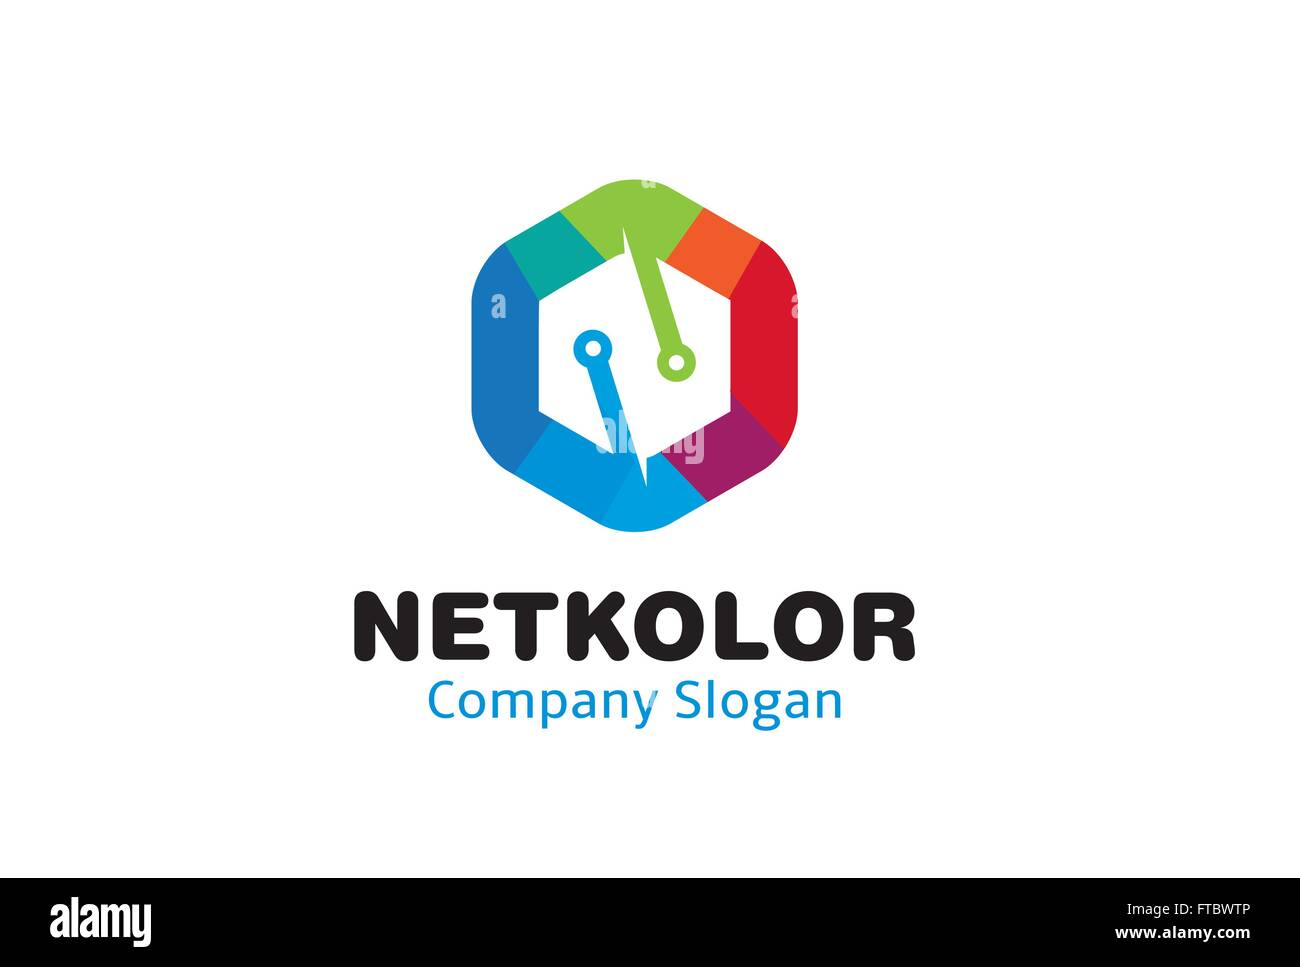 Network Color Design Illustration Stock Vector